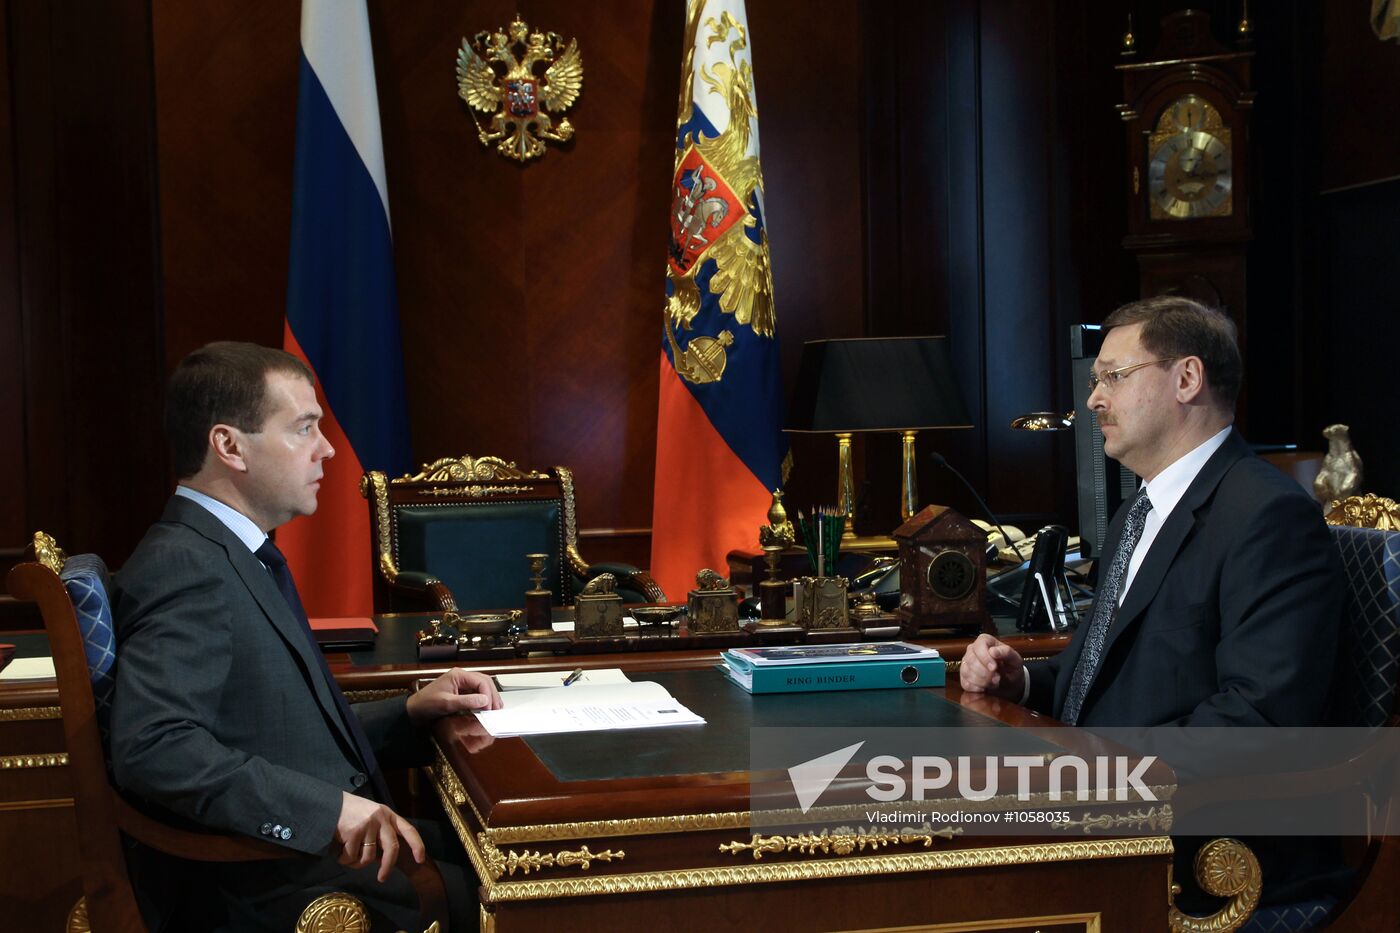 Dmitry Medvedev meets with Konstantin Kosachev